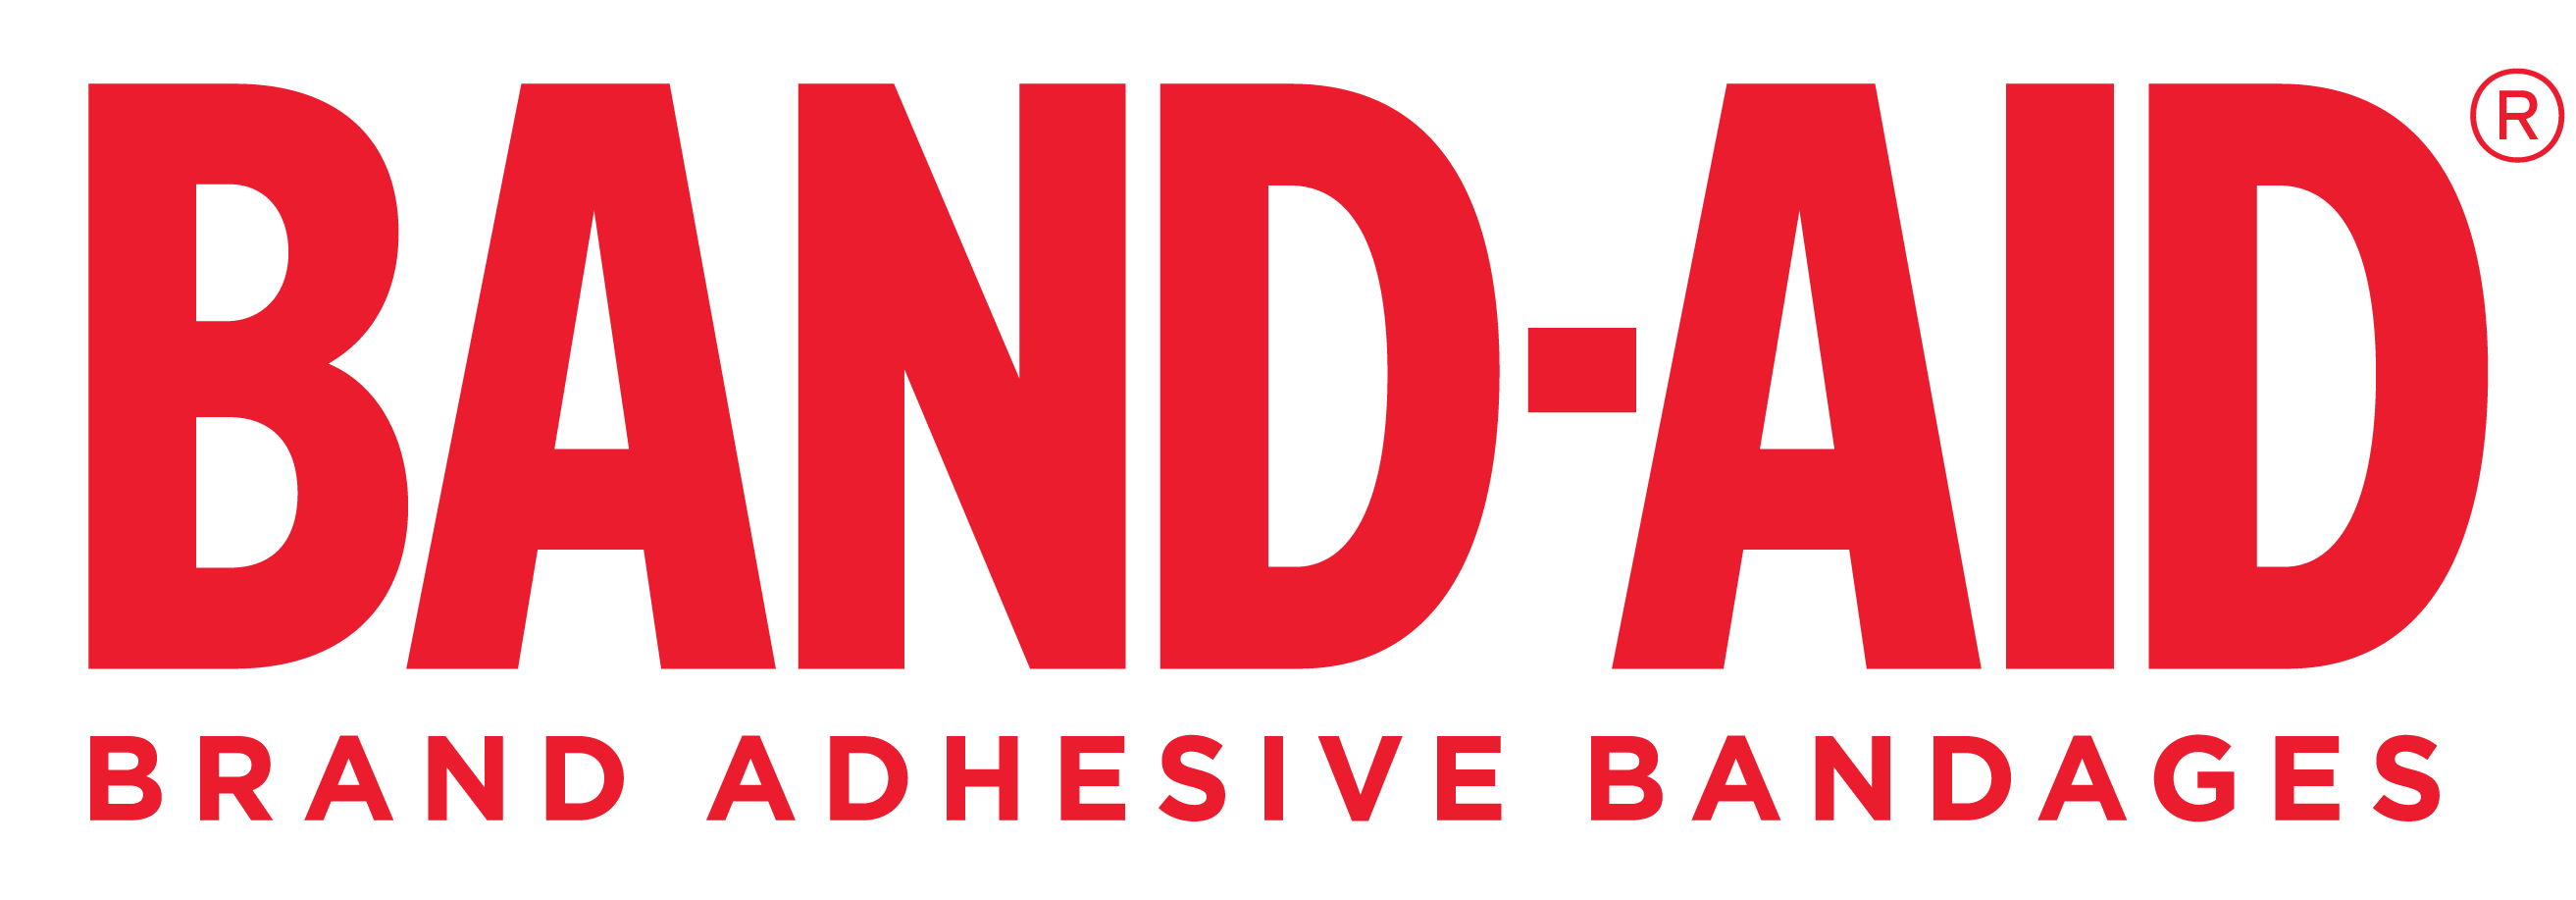 Buy Band Aid Organizer online